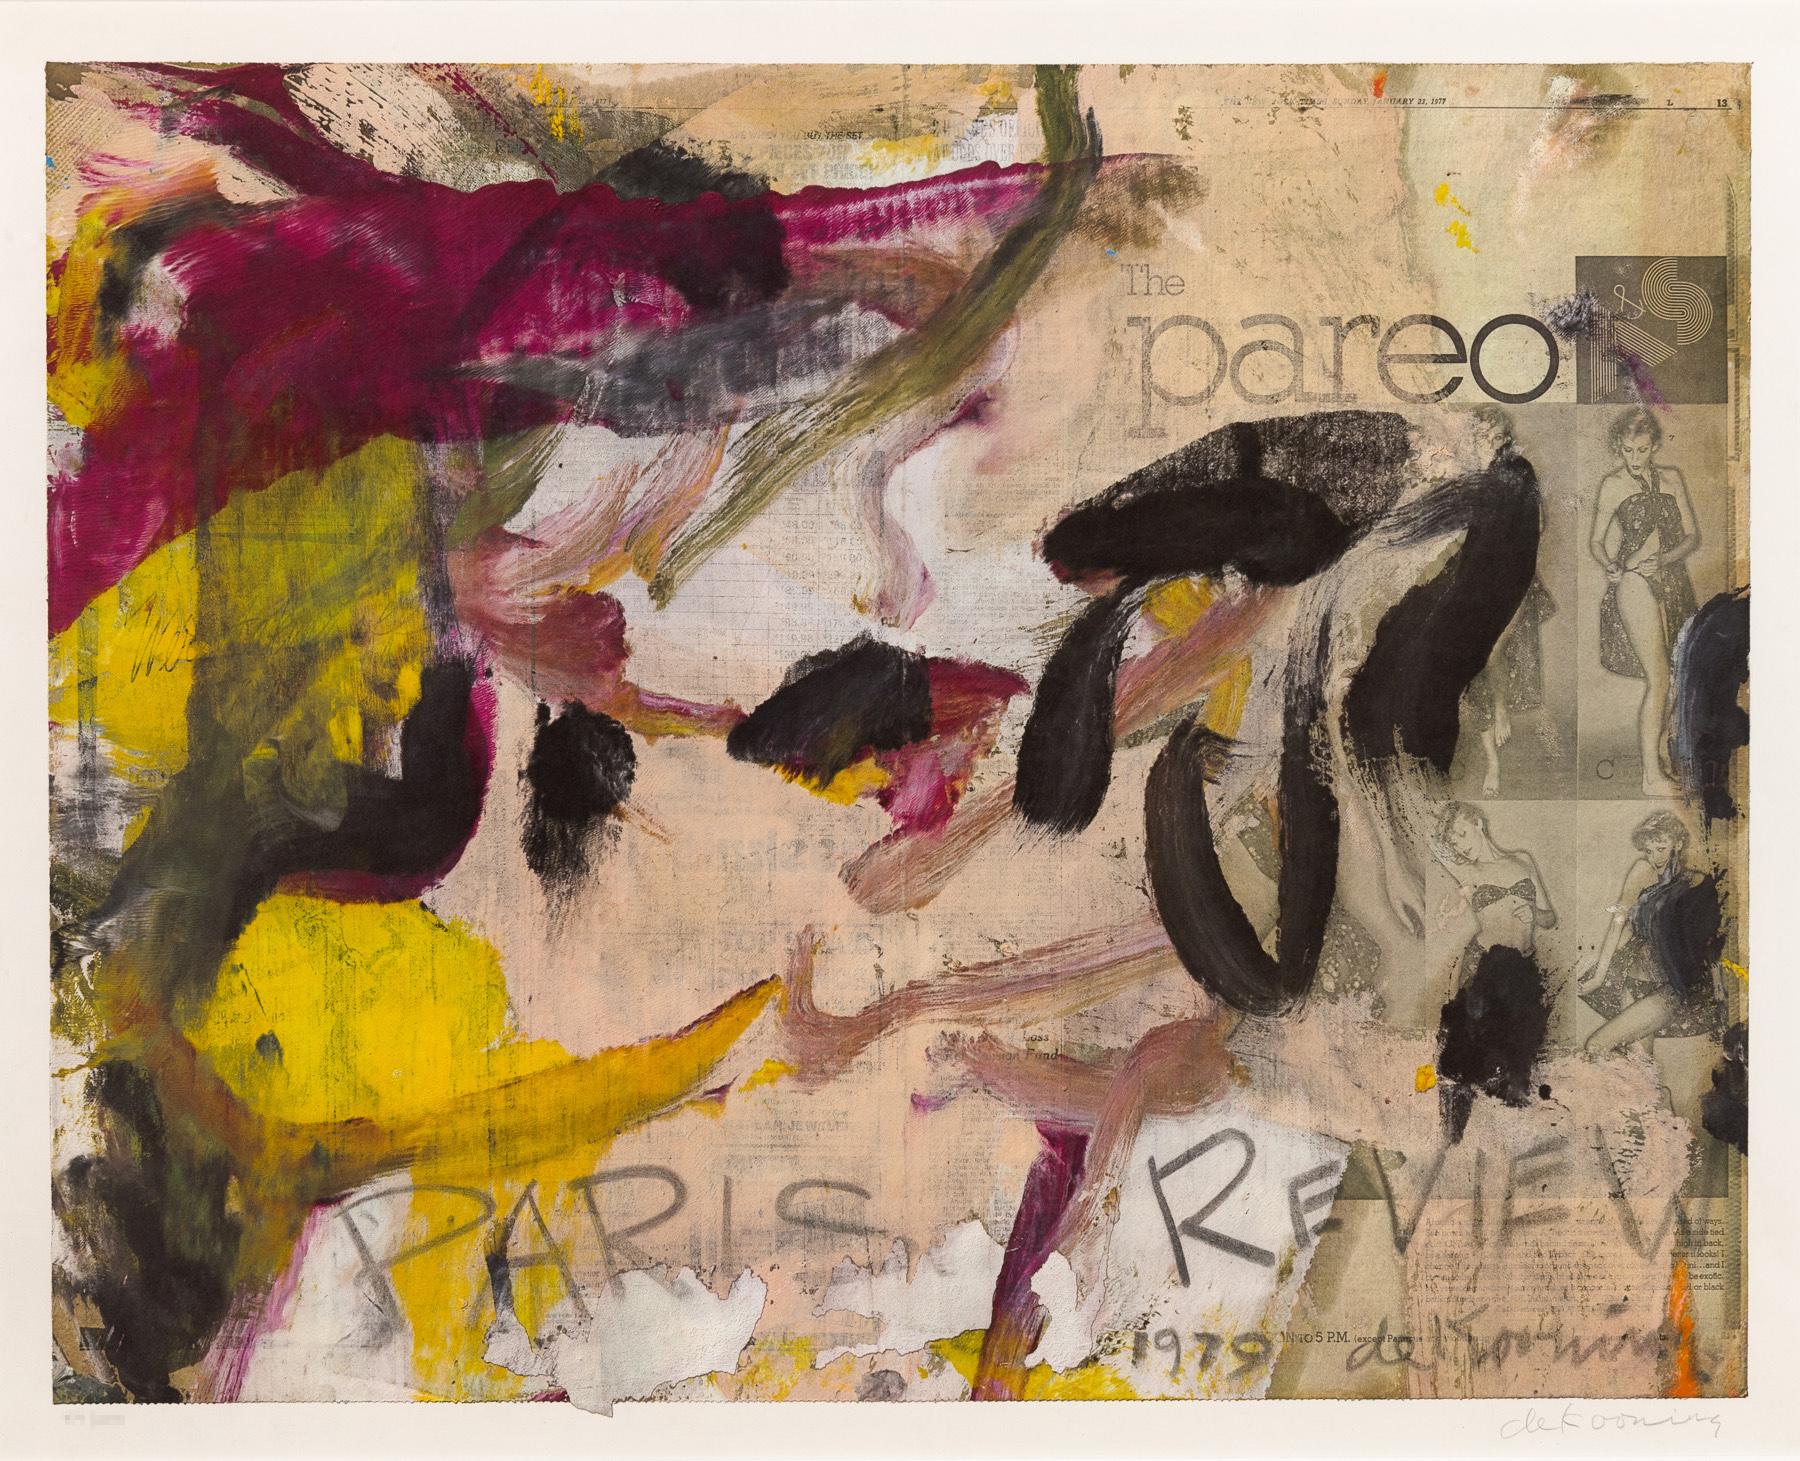 Willem de Kooning Abstract Print - Paris Review